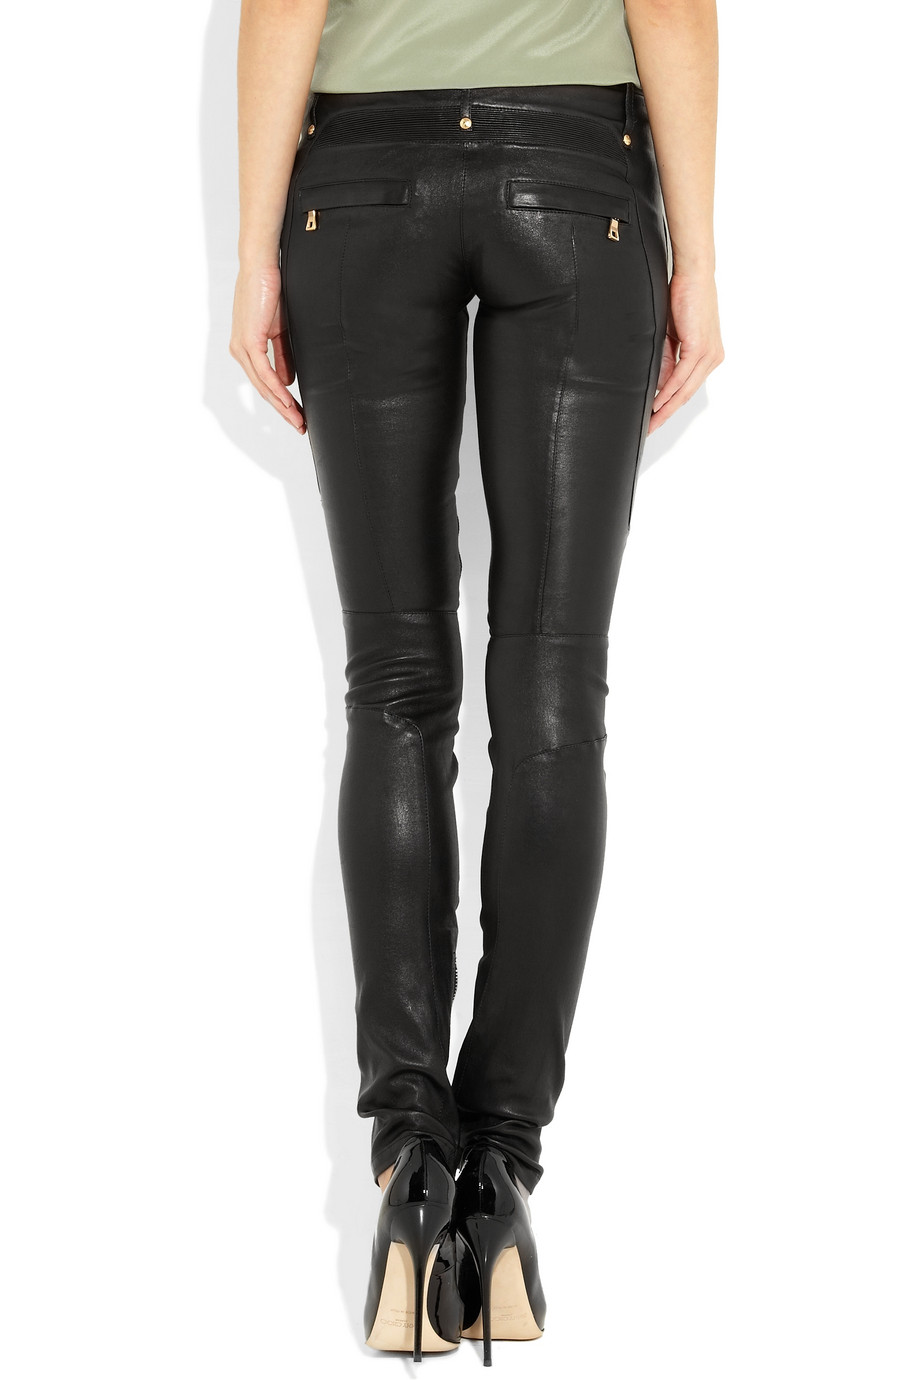 Balmain Skinny Leather Pants in Black - Lyst